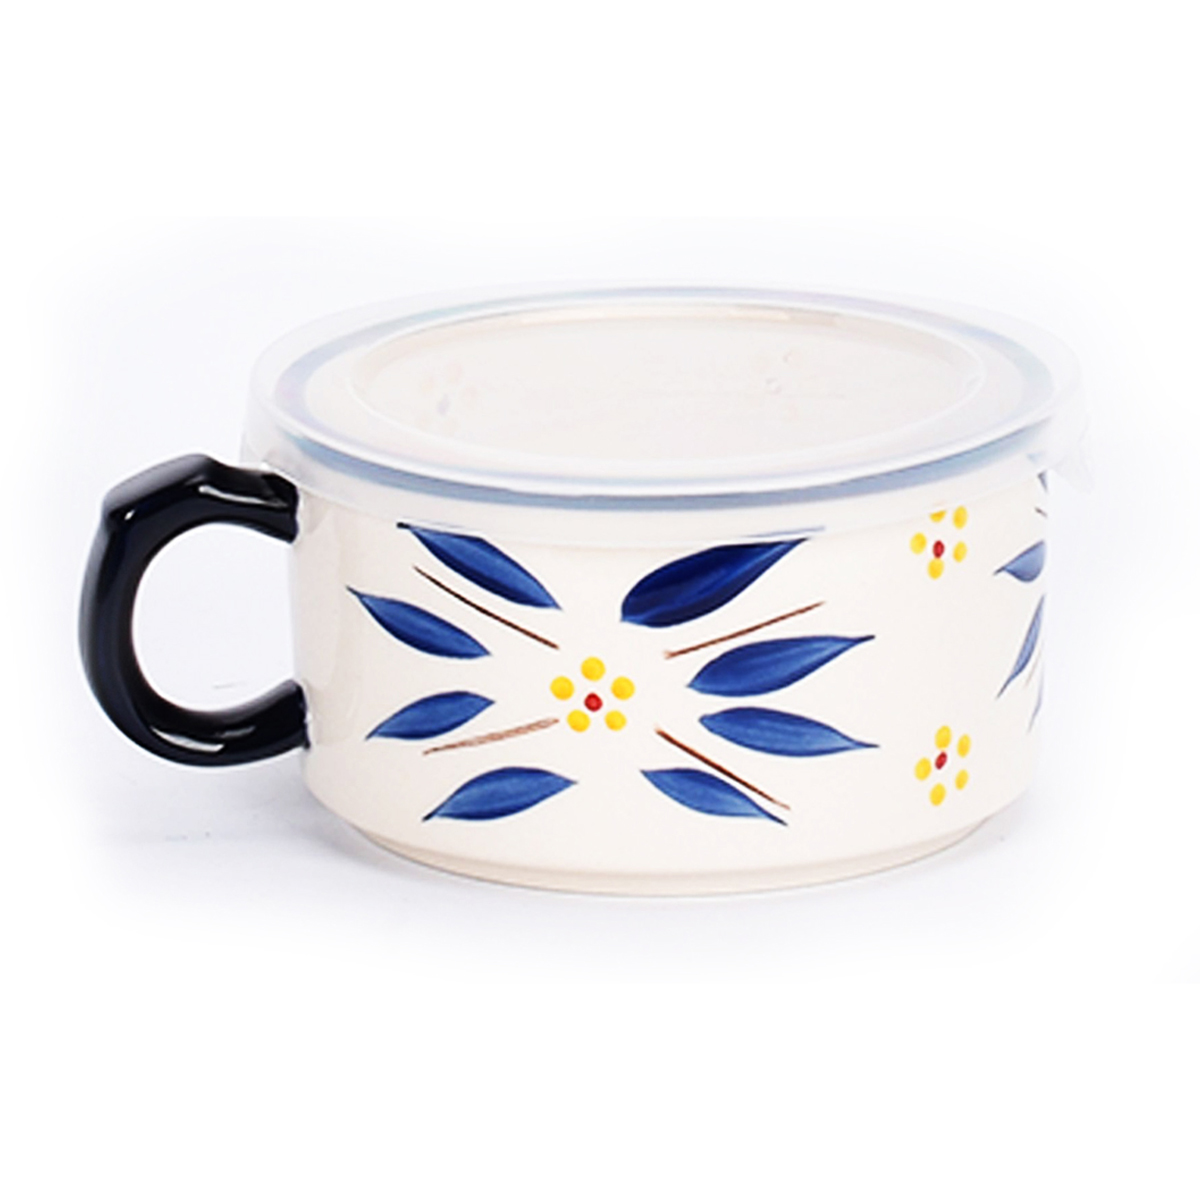 temp-tations® Old World Meal Mug with Gift Box – Blue